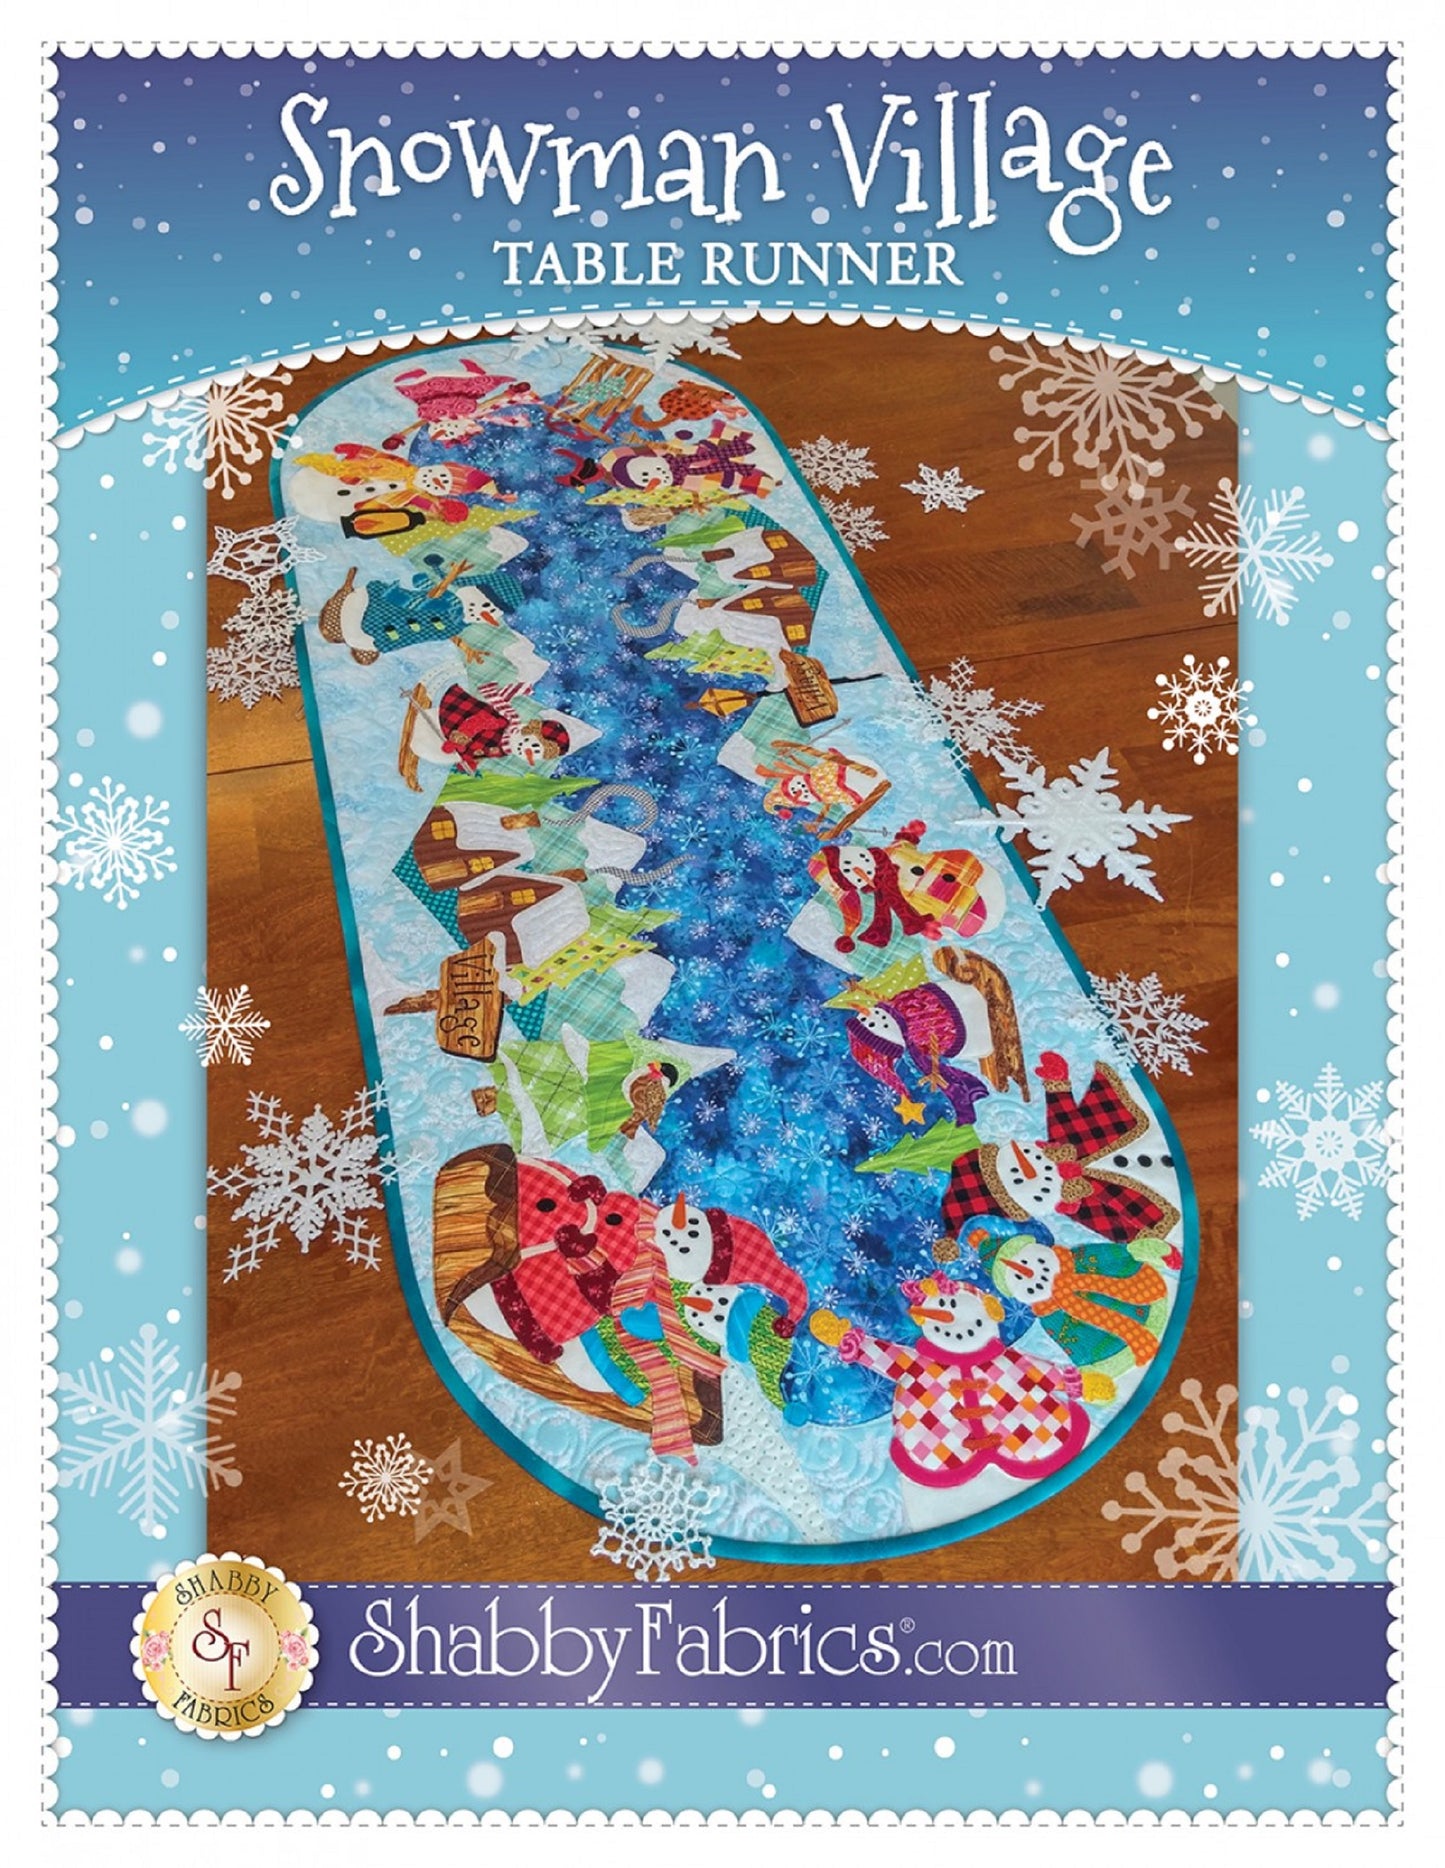 Snowman Village Table Runner Pattern by Shabby Fabrics